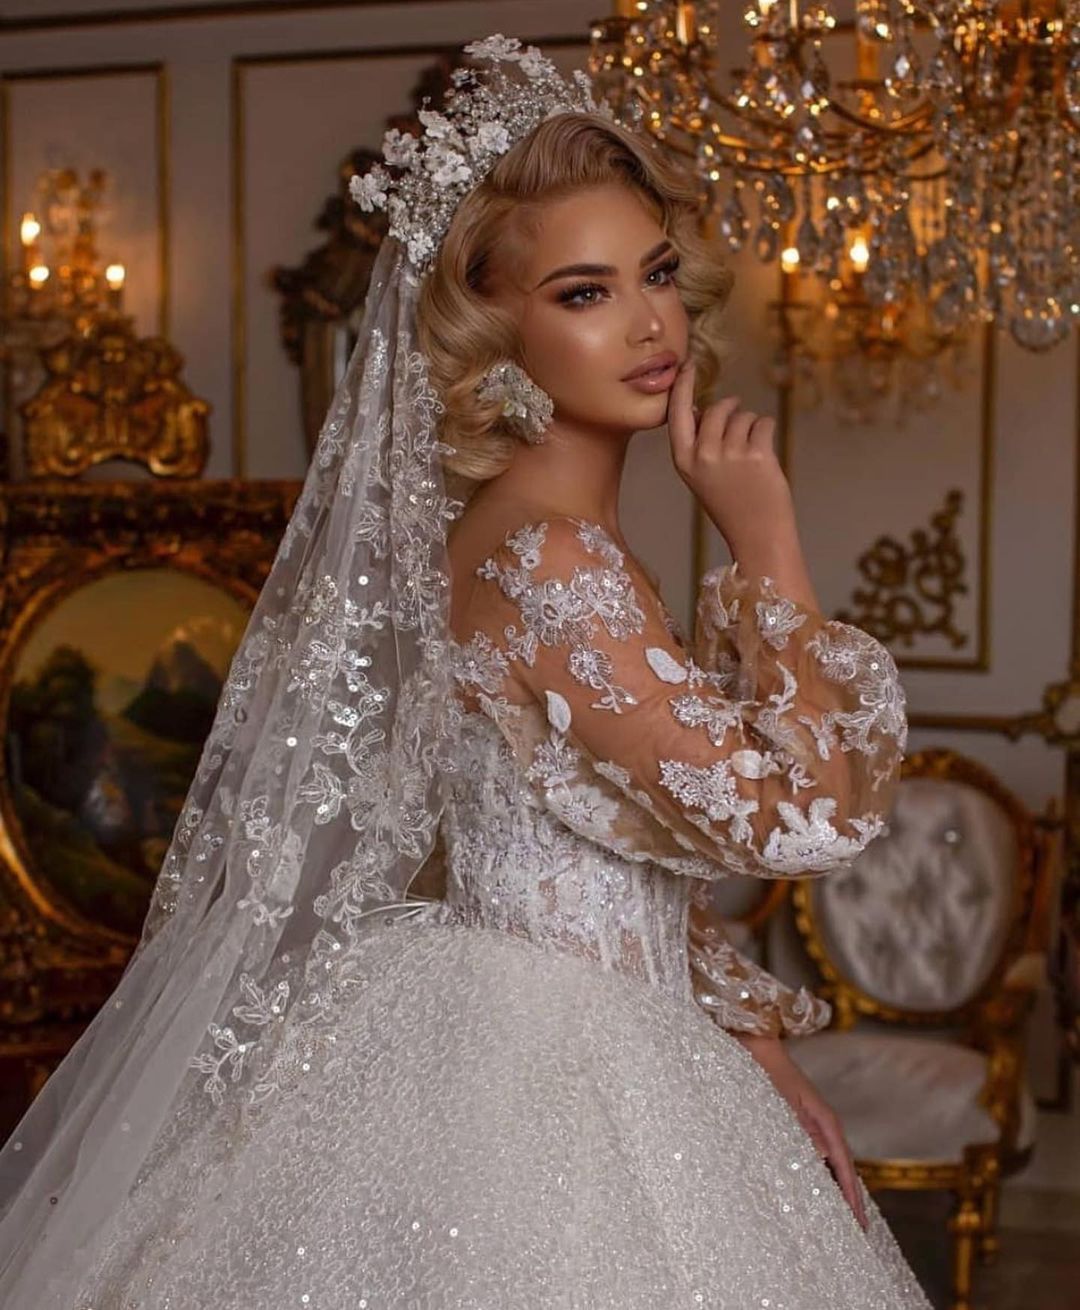 Premium Photo | Bride in a wedding dress with white glitter